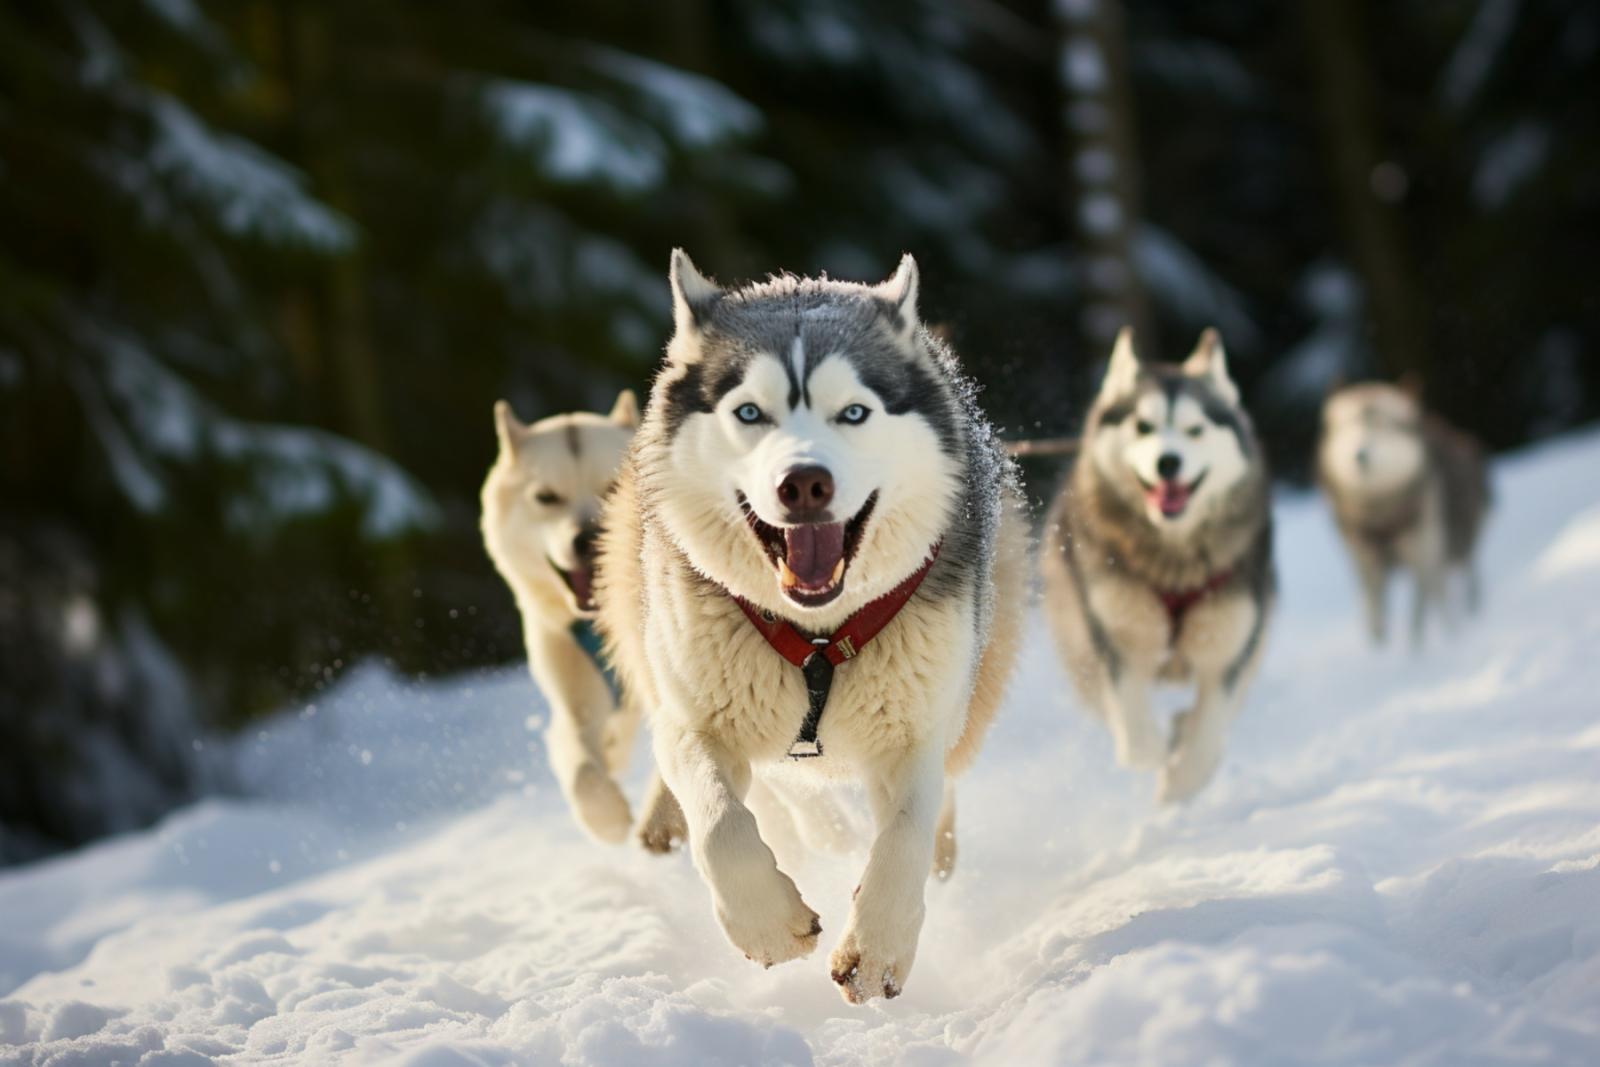 Sled dogs race through the snow. 